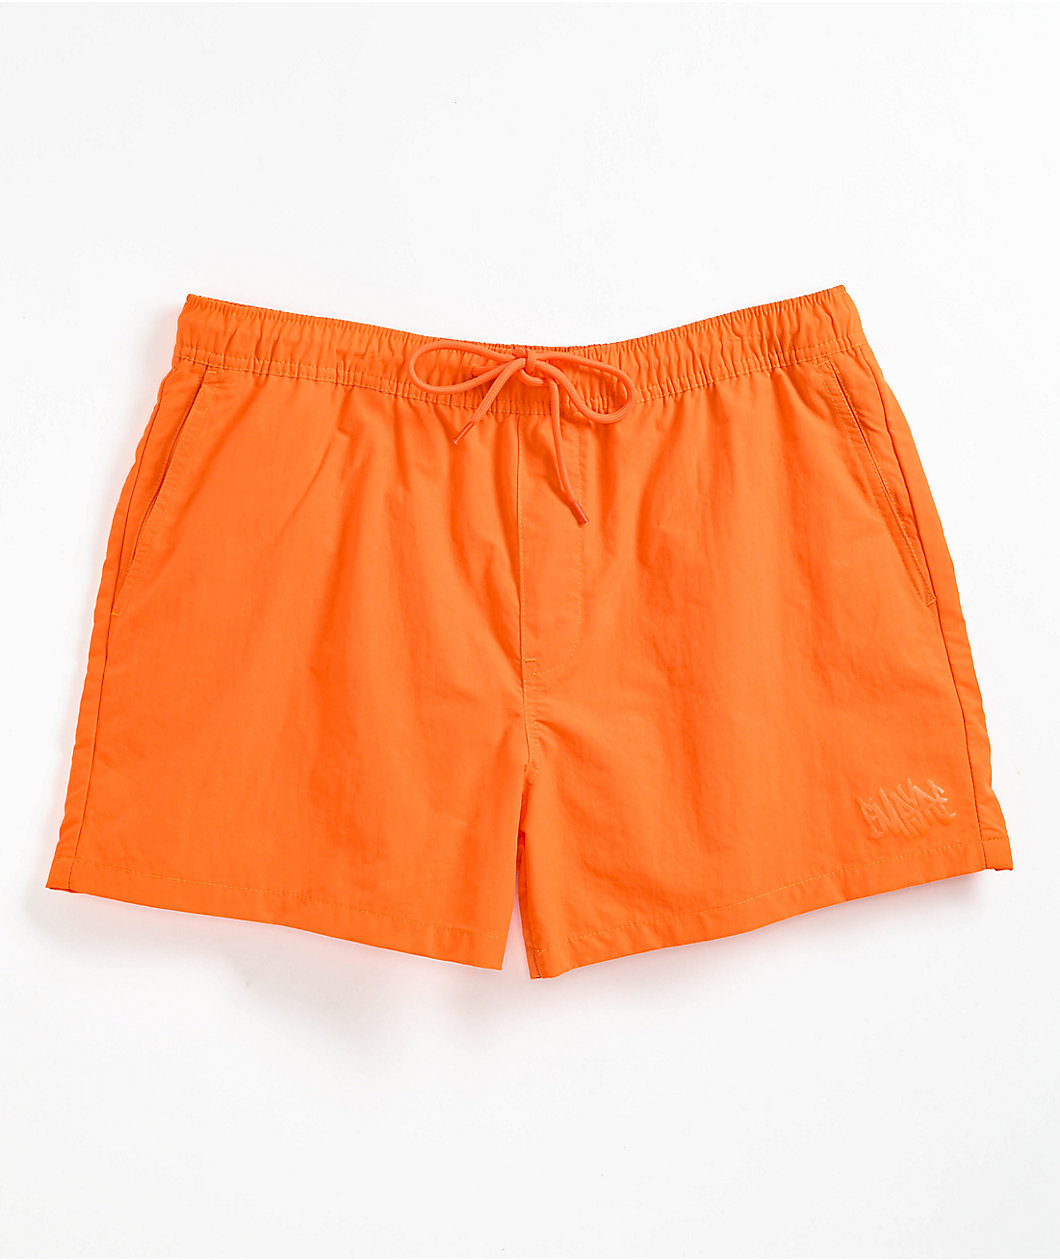 Empyre Ollie Orange Board Shorts